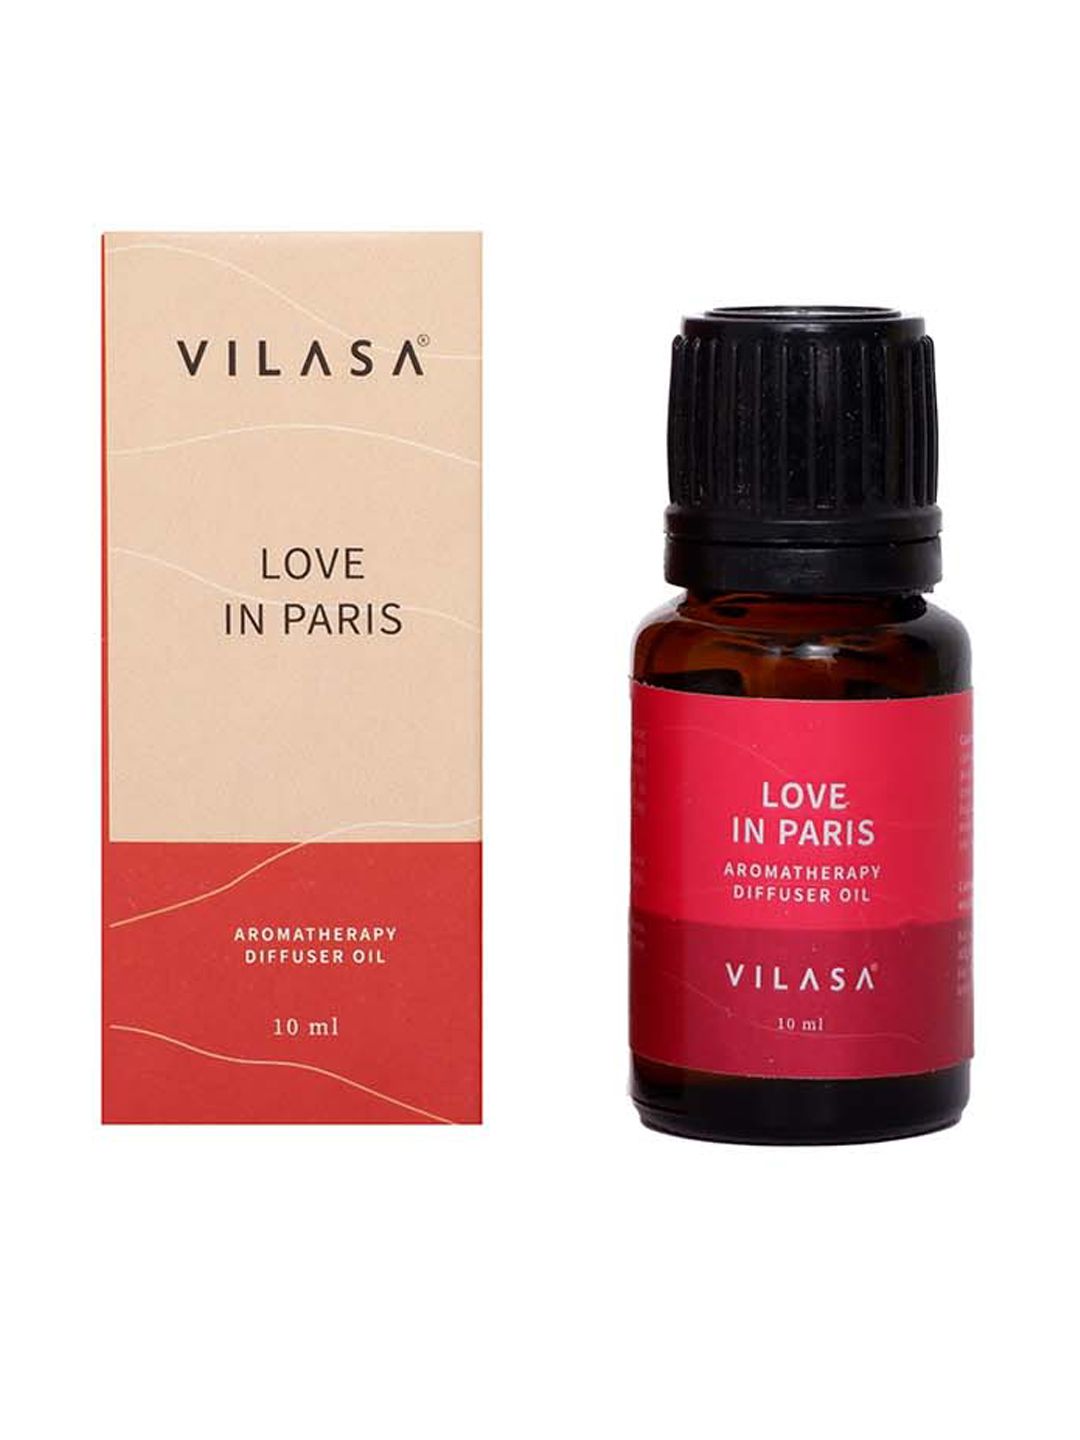 VILASA Love in Paris Aromatherapy Diffuser Oil - 10 ml Price in India